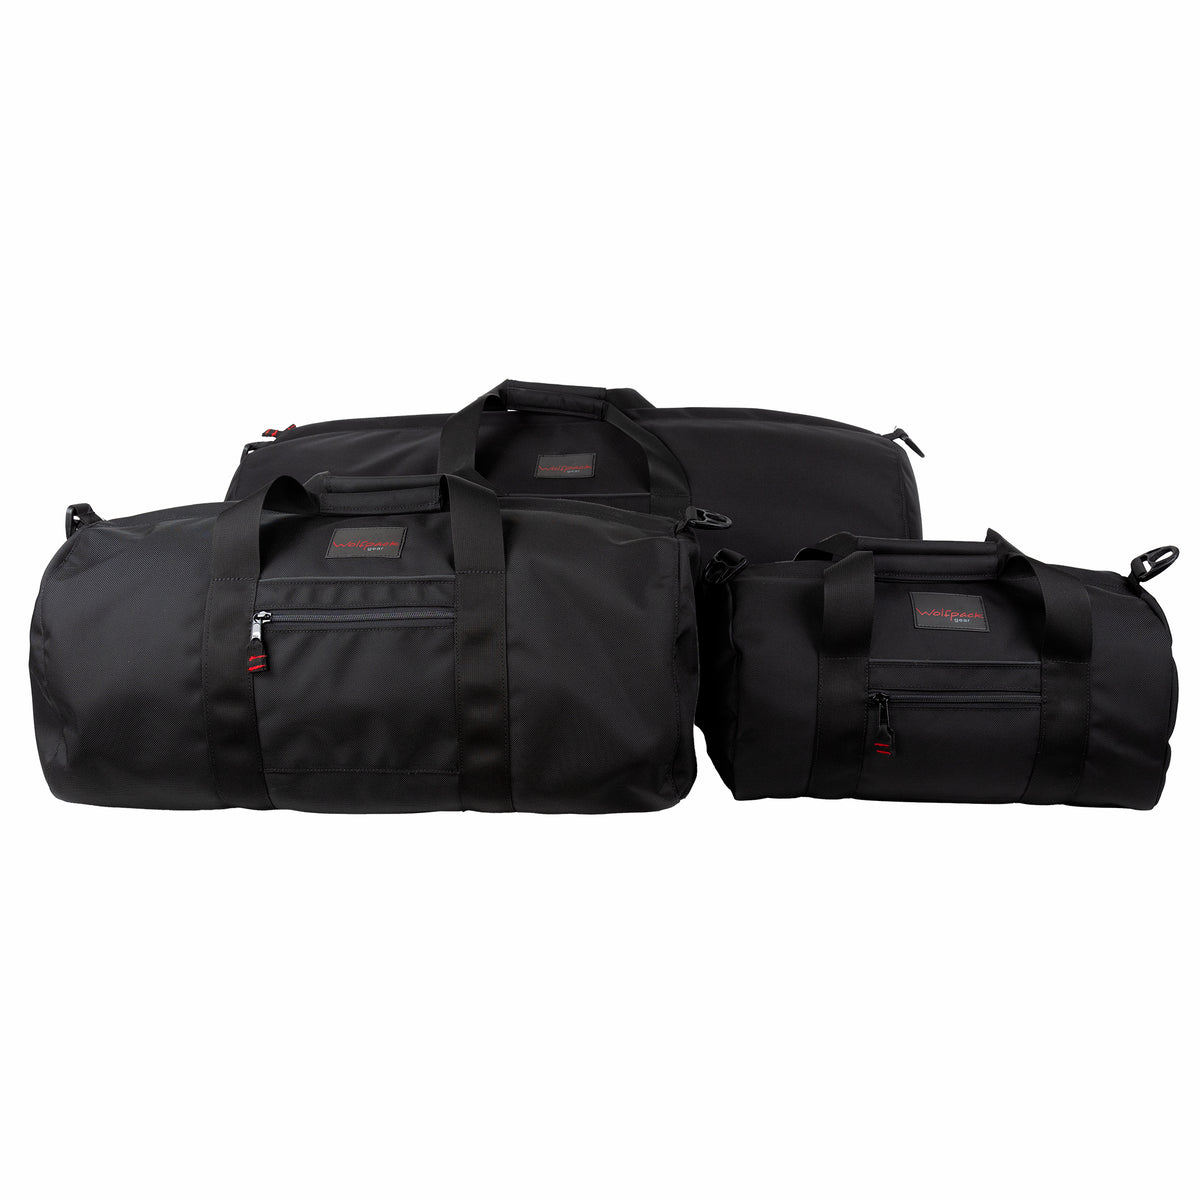 Wolfpack Gear™ Duffle Bags in 3 sizes